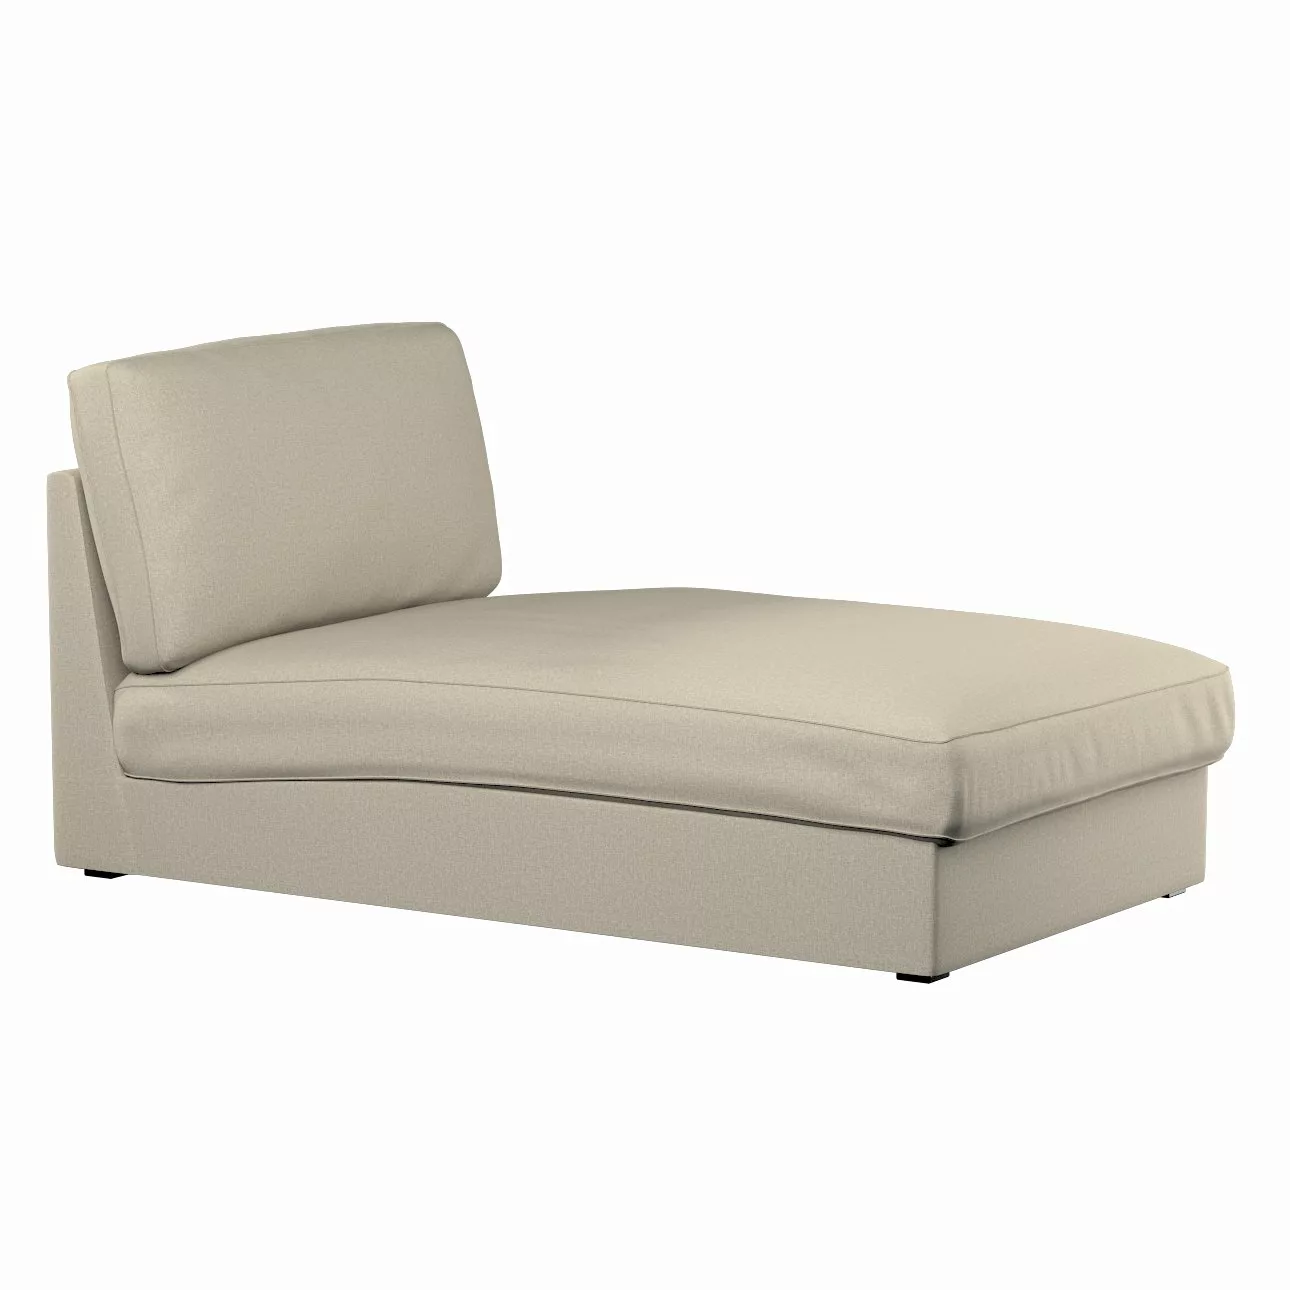 Bezug für Kivik Recamiere Sofa, grau-beige, Bezug für Kivik Recamiere, Amst günstig online kaufen